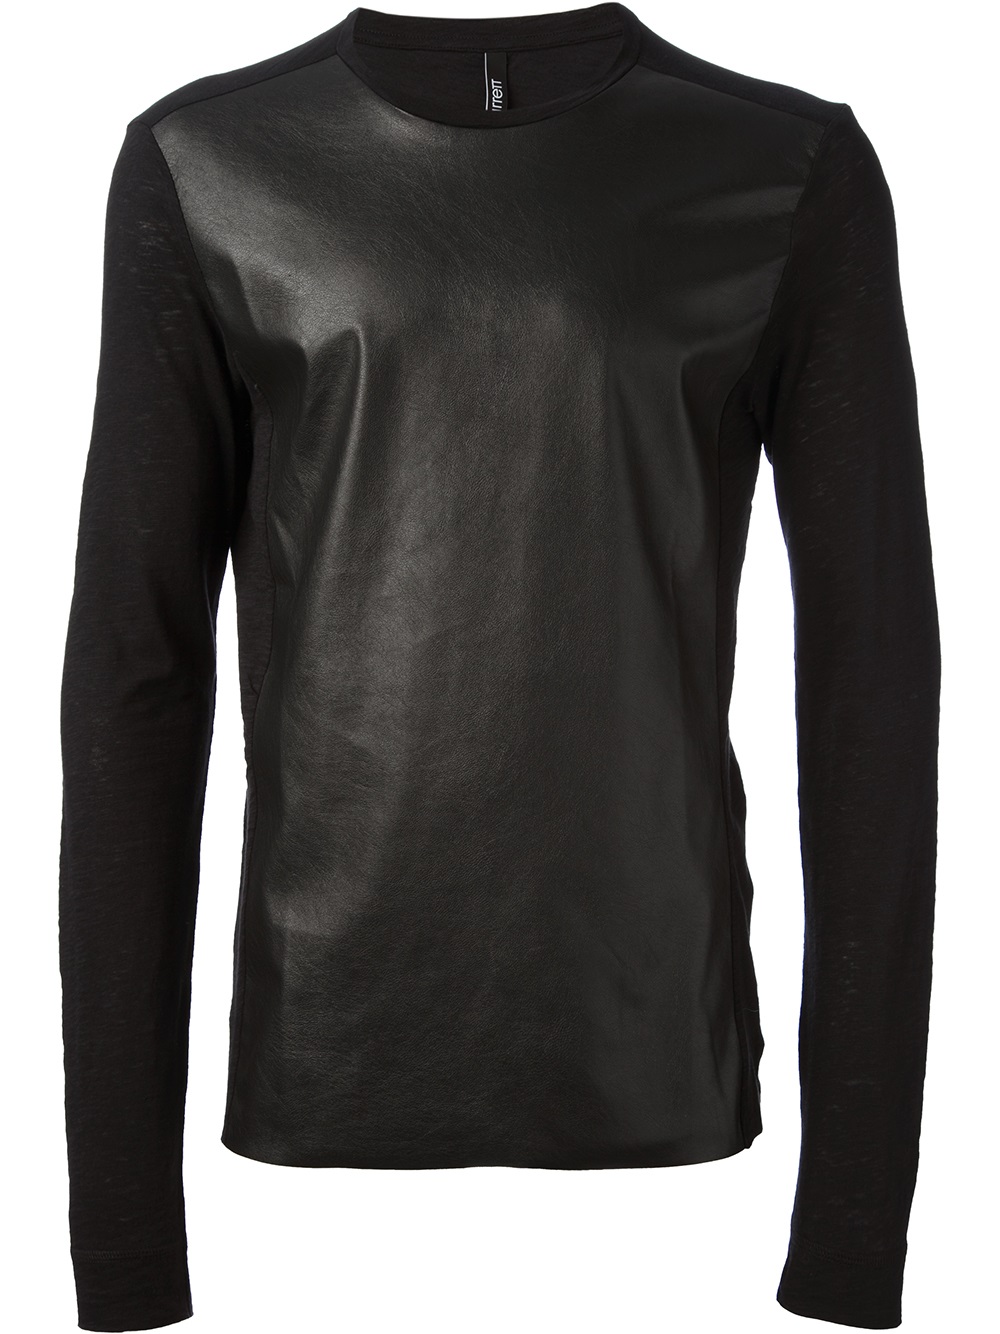 Lyst - Neil Barrett Leather Look Tshirt in Black for Men